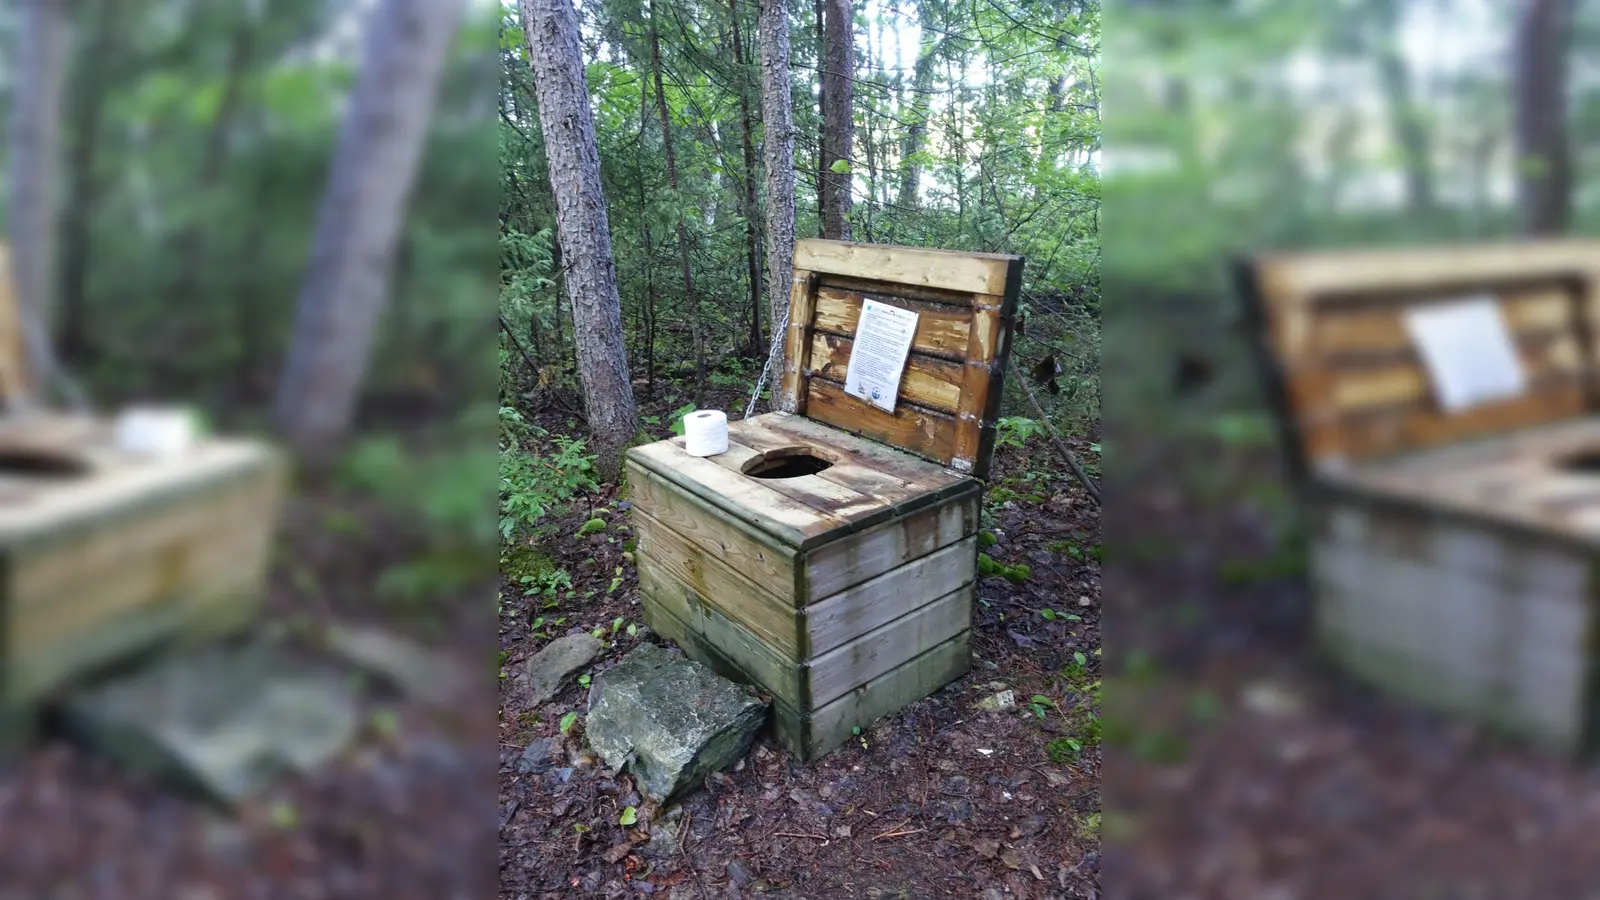 So sieht sie aus, die „Donnerbox“ im Wald. Immerhin gibt es Klopapier. (Foto: Andreas Drouve/dpa-tmn)